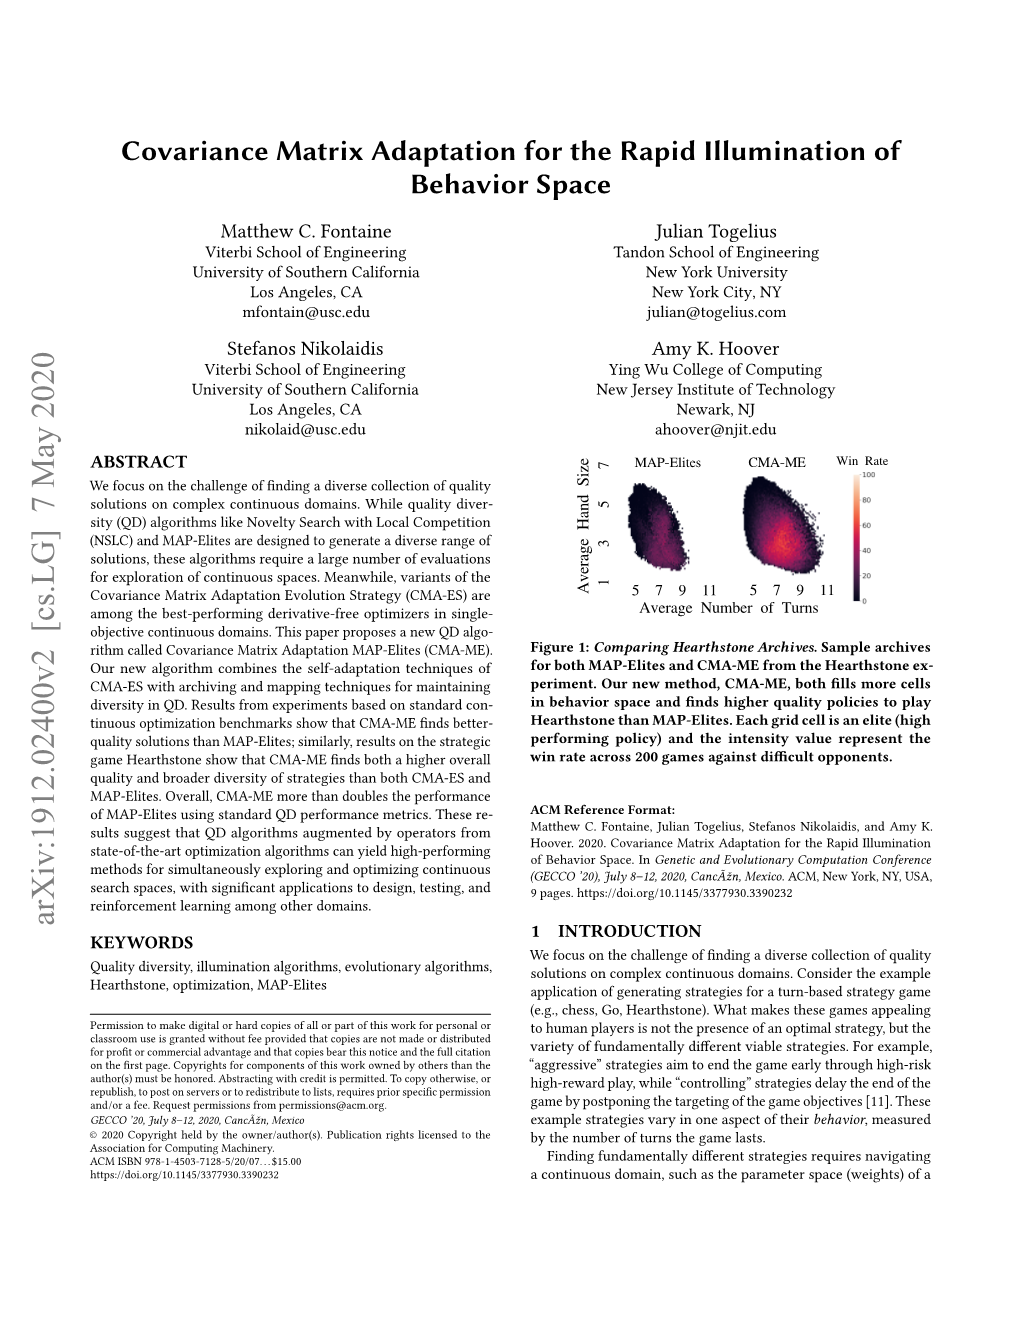 Covariance Matrix Adaptation for the Rapid Illumination of Behavior Space